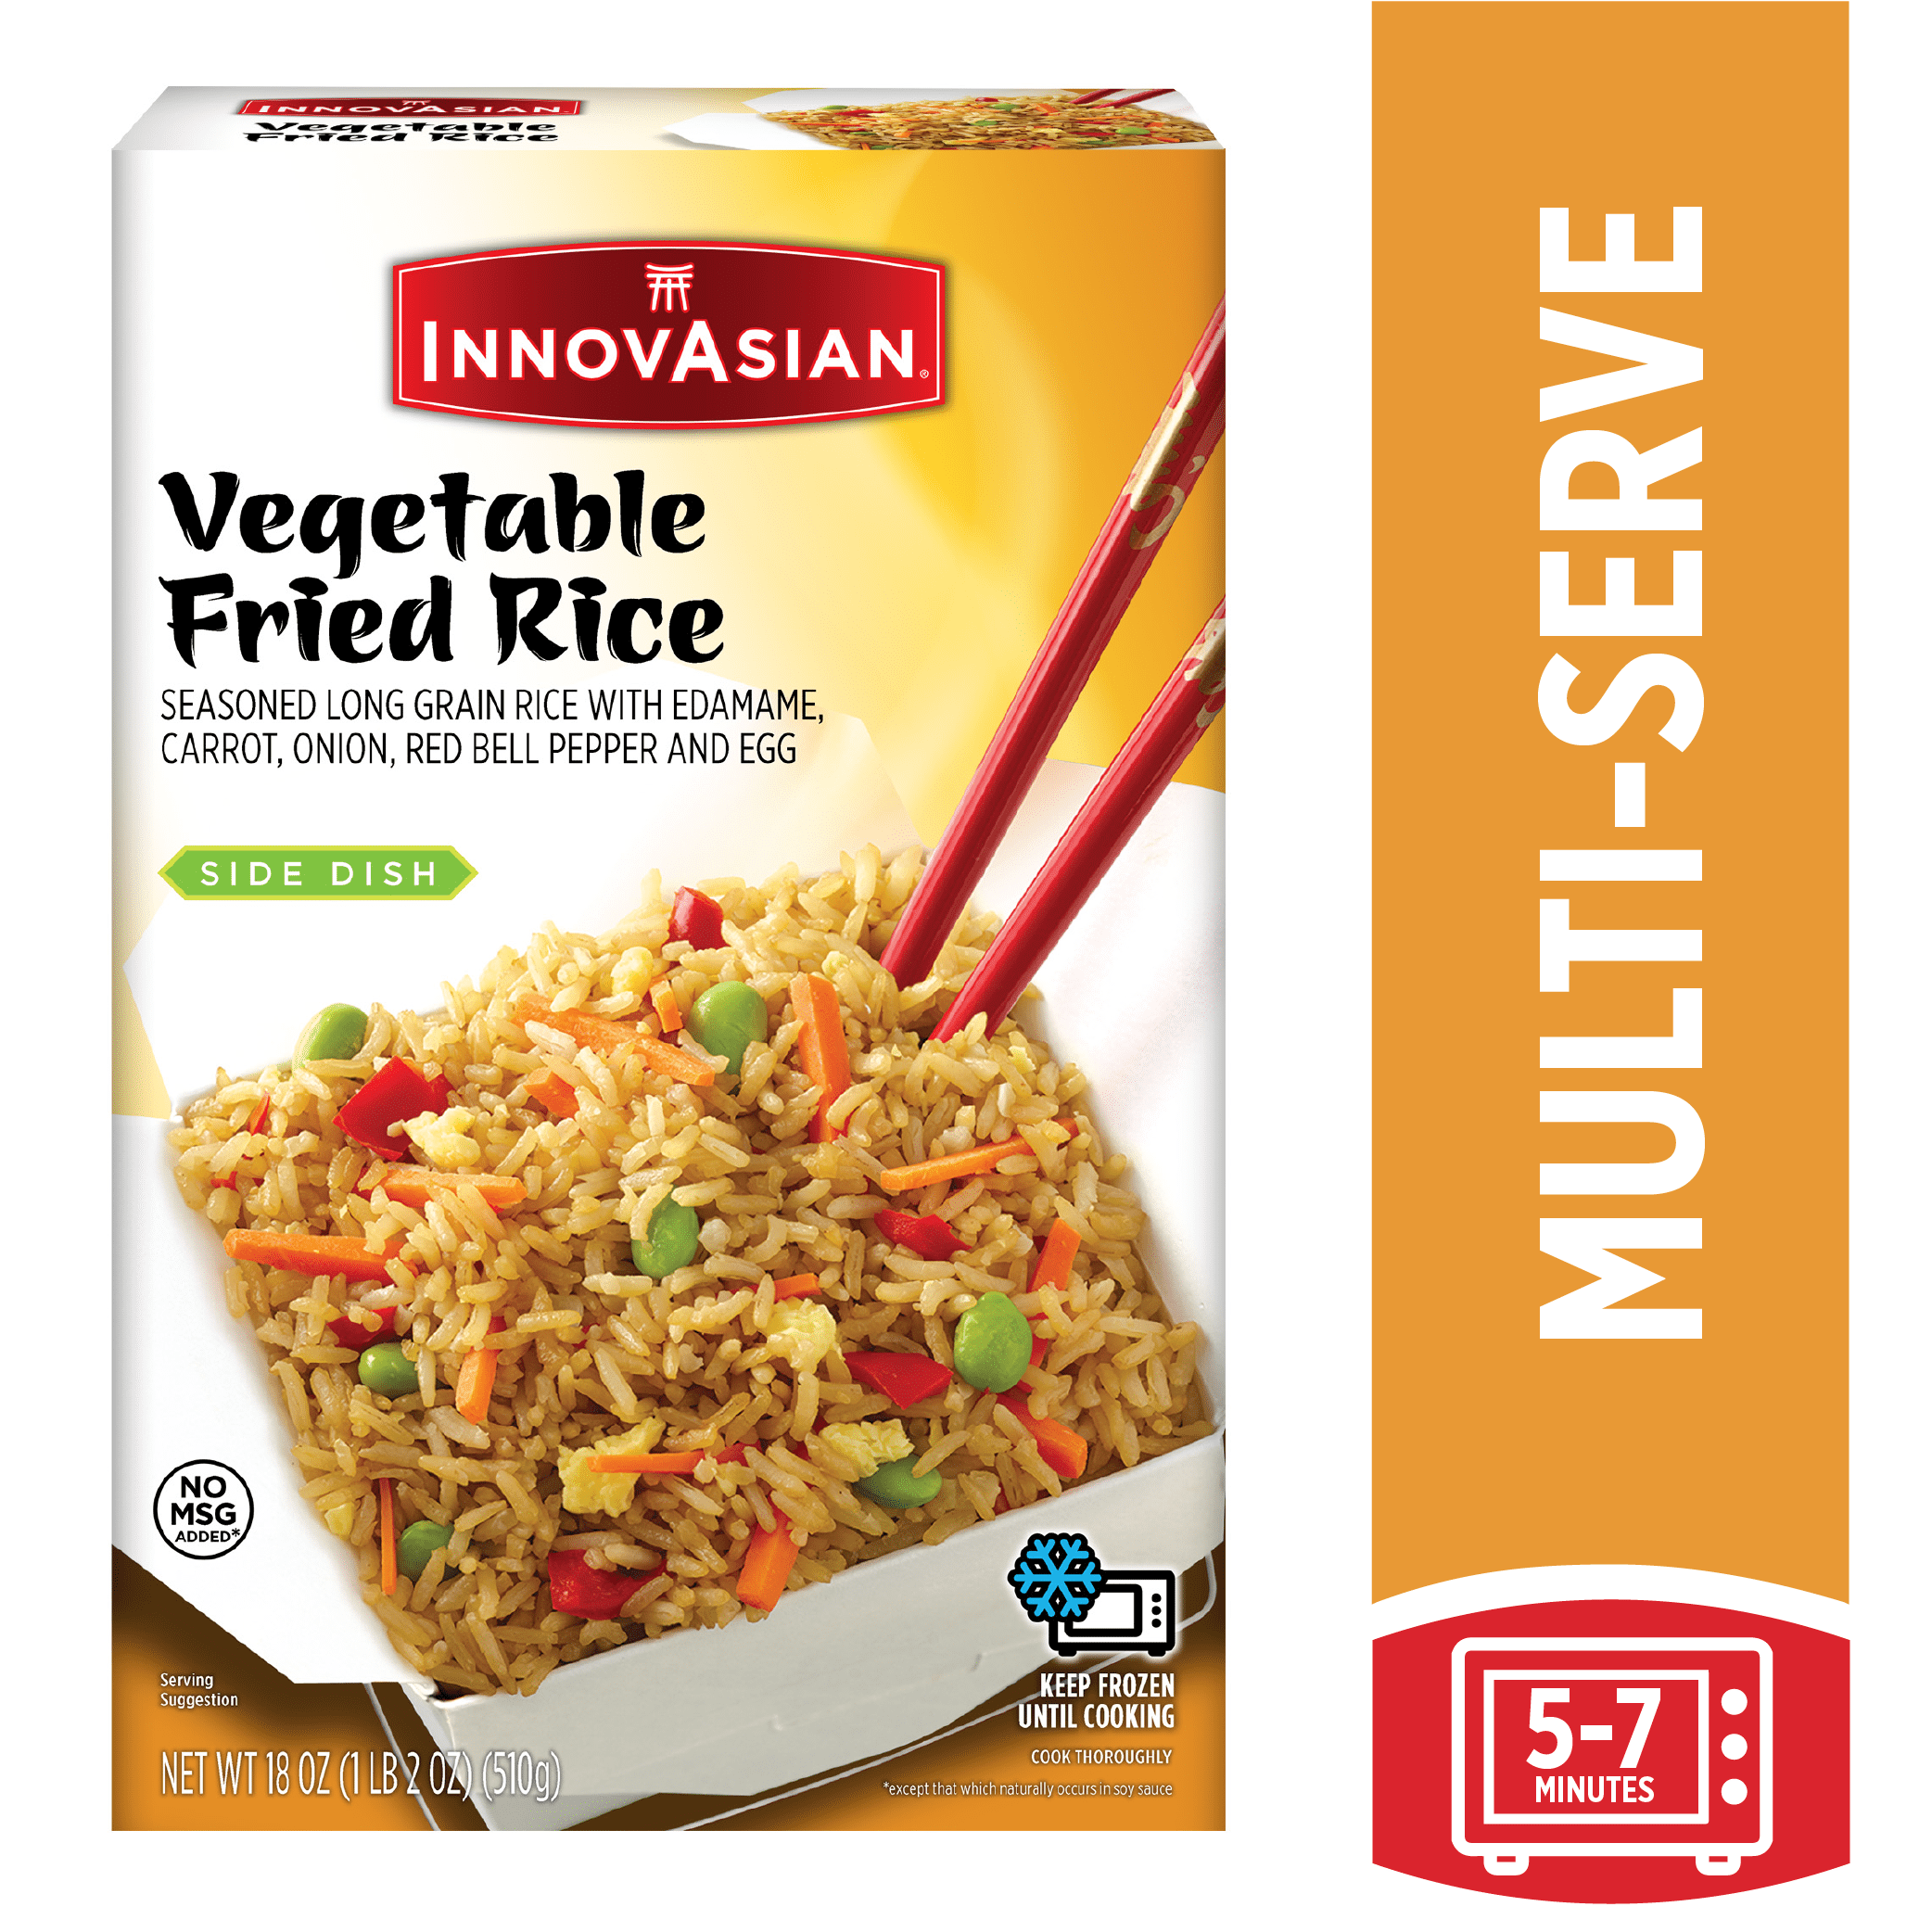 InnovAsian Vegetable Fried Rice, 18 oz (Frozen Meal)